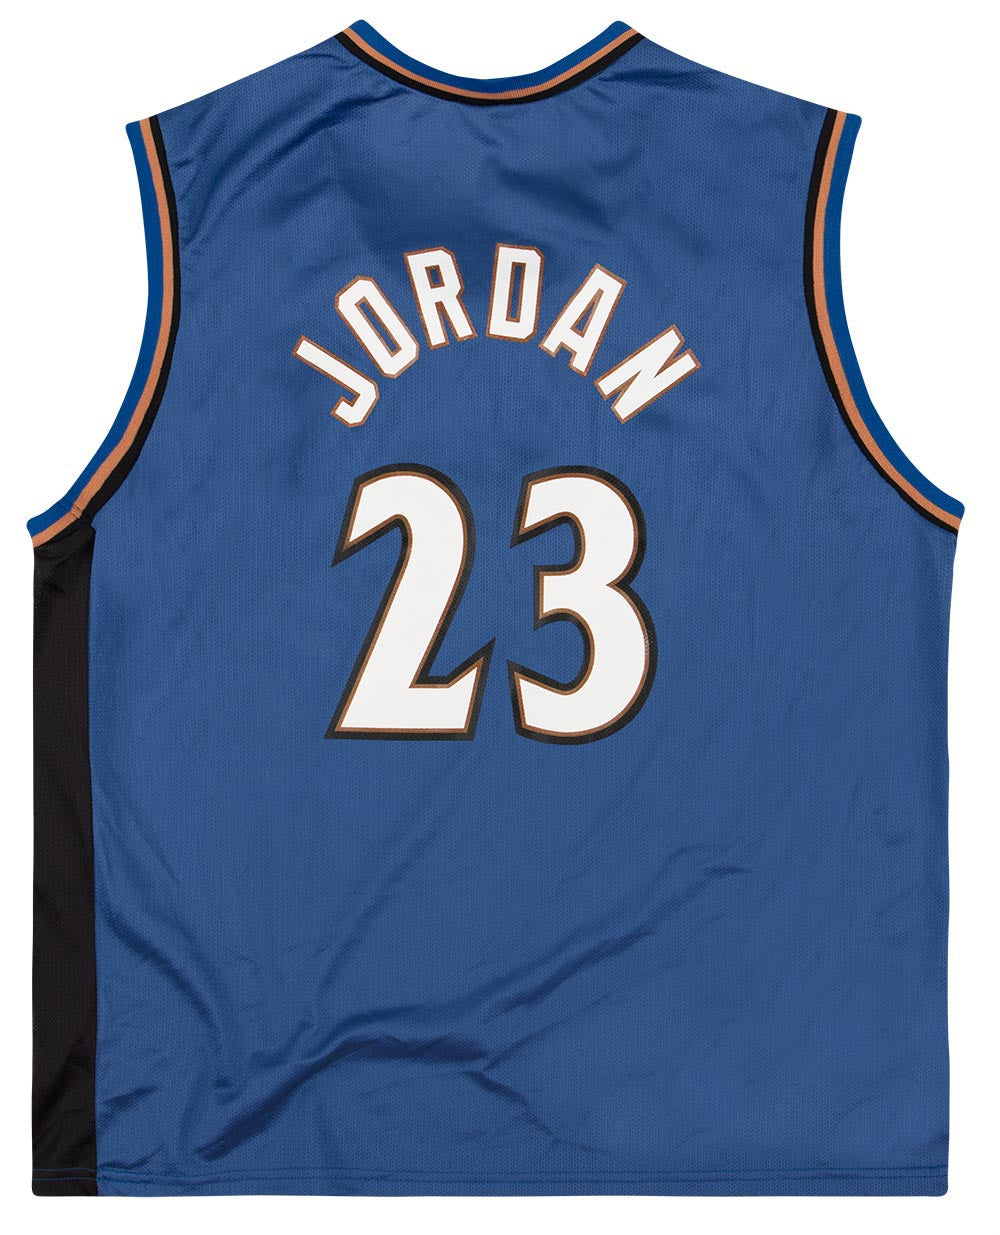 New Champion MICHAEL JORDAN NBA Jersey ~ Wizards #23 ~ Size Medium